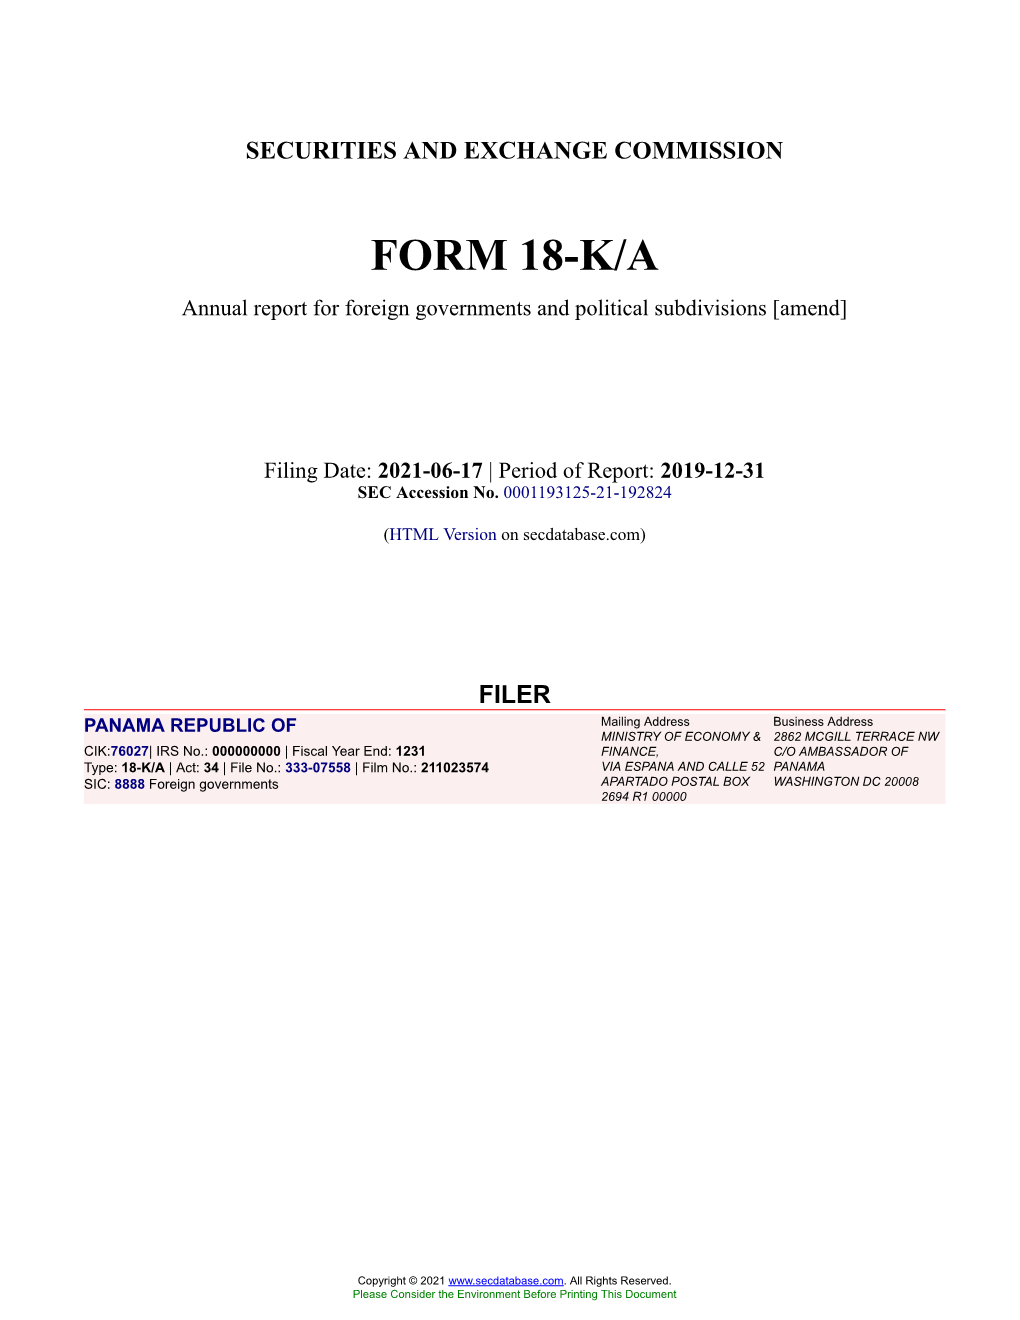 PANAMA REPUBLIC of Form 18-K/A Filed 2021-06-17